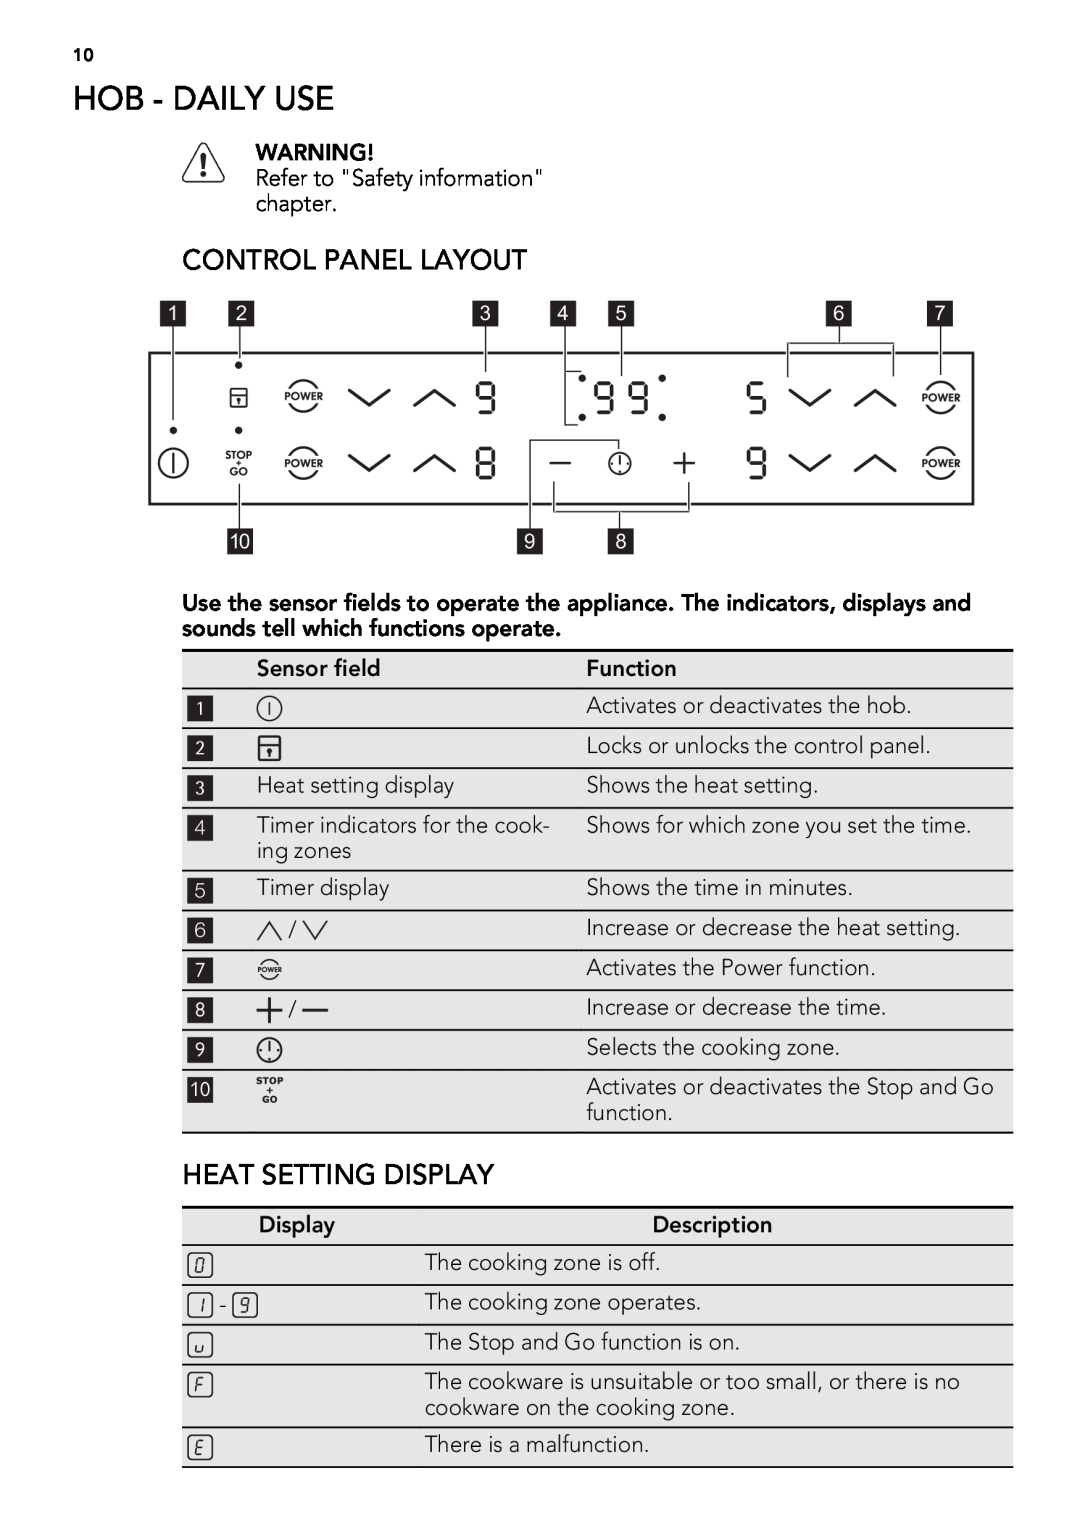 AEG 49332I-MN user manual Hob - Daily Use, Control Panel Layout, Heat Setting Display 